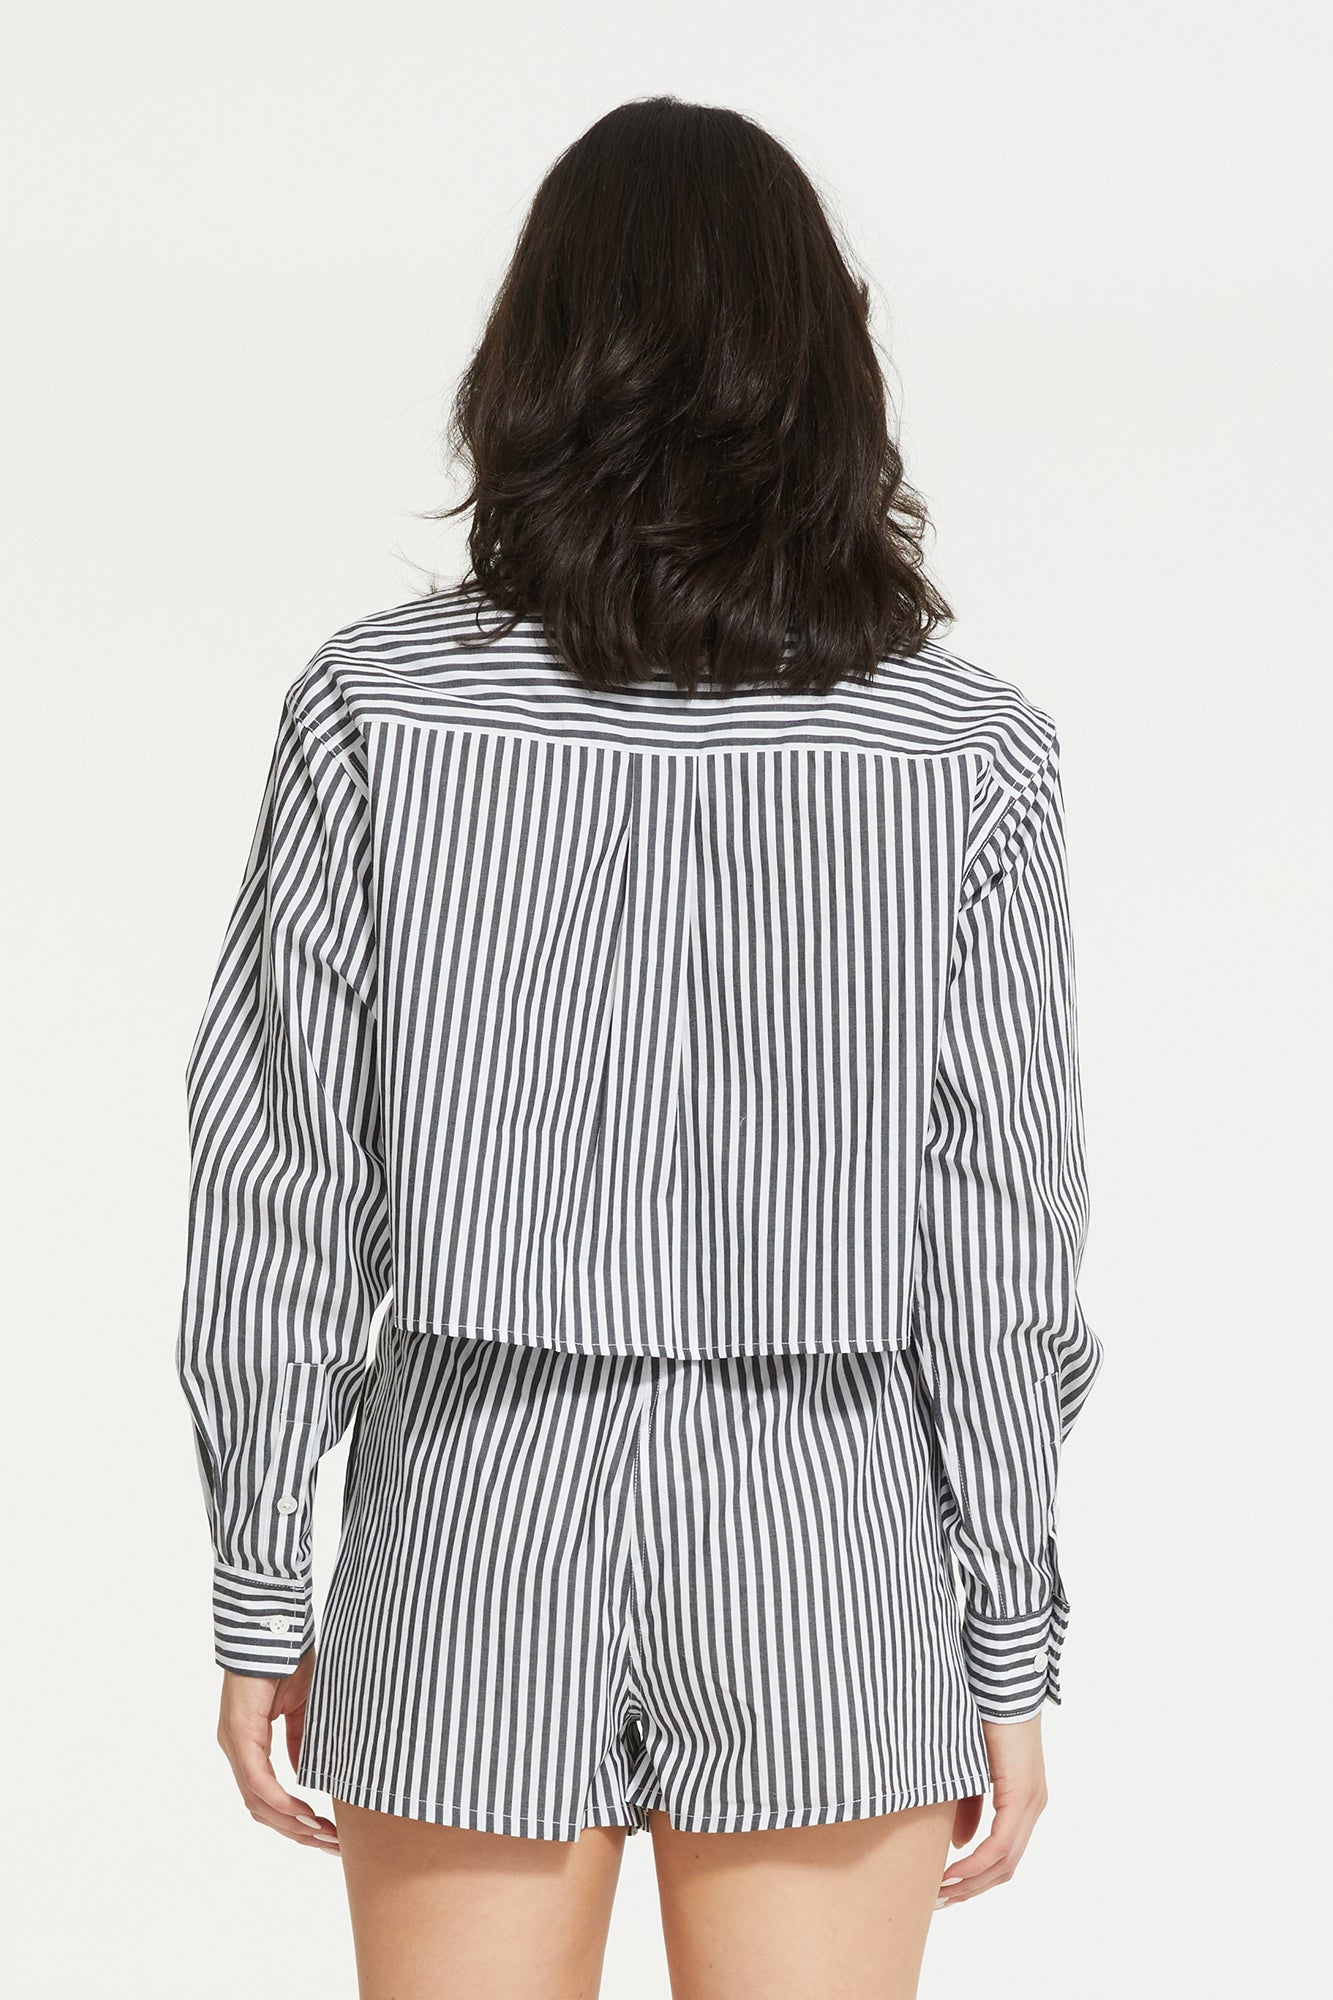 The Franca Stripe Crop Shirt By GINIA In Black & White Stripe